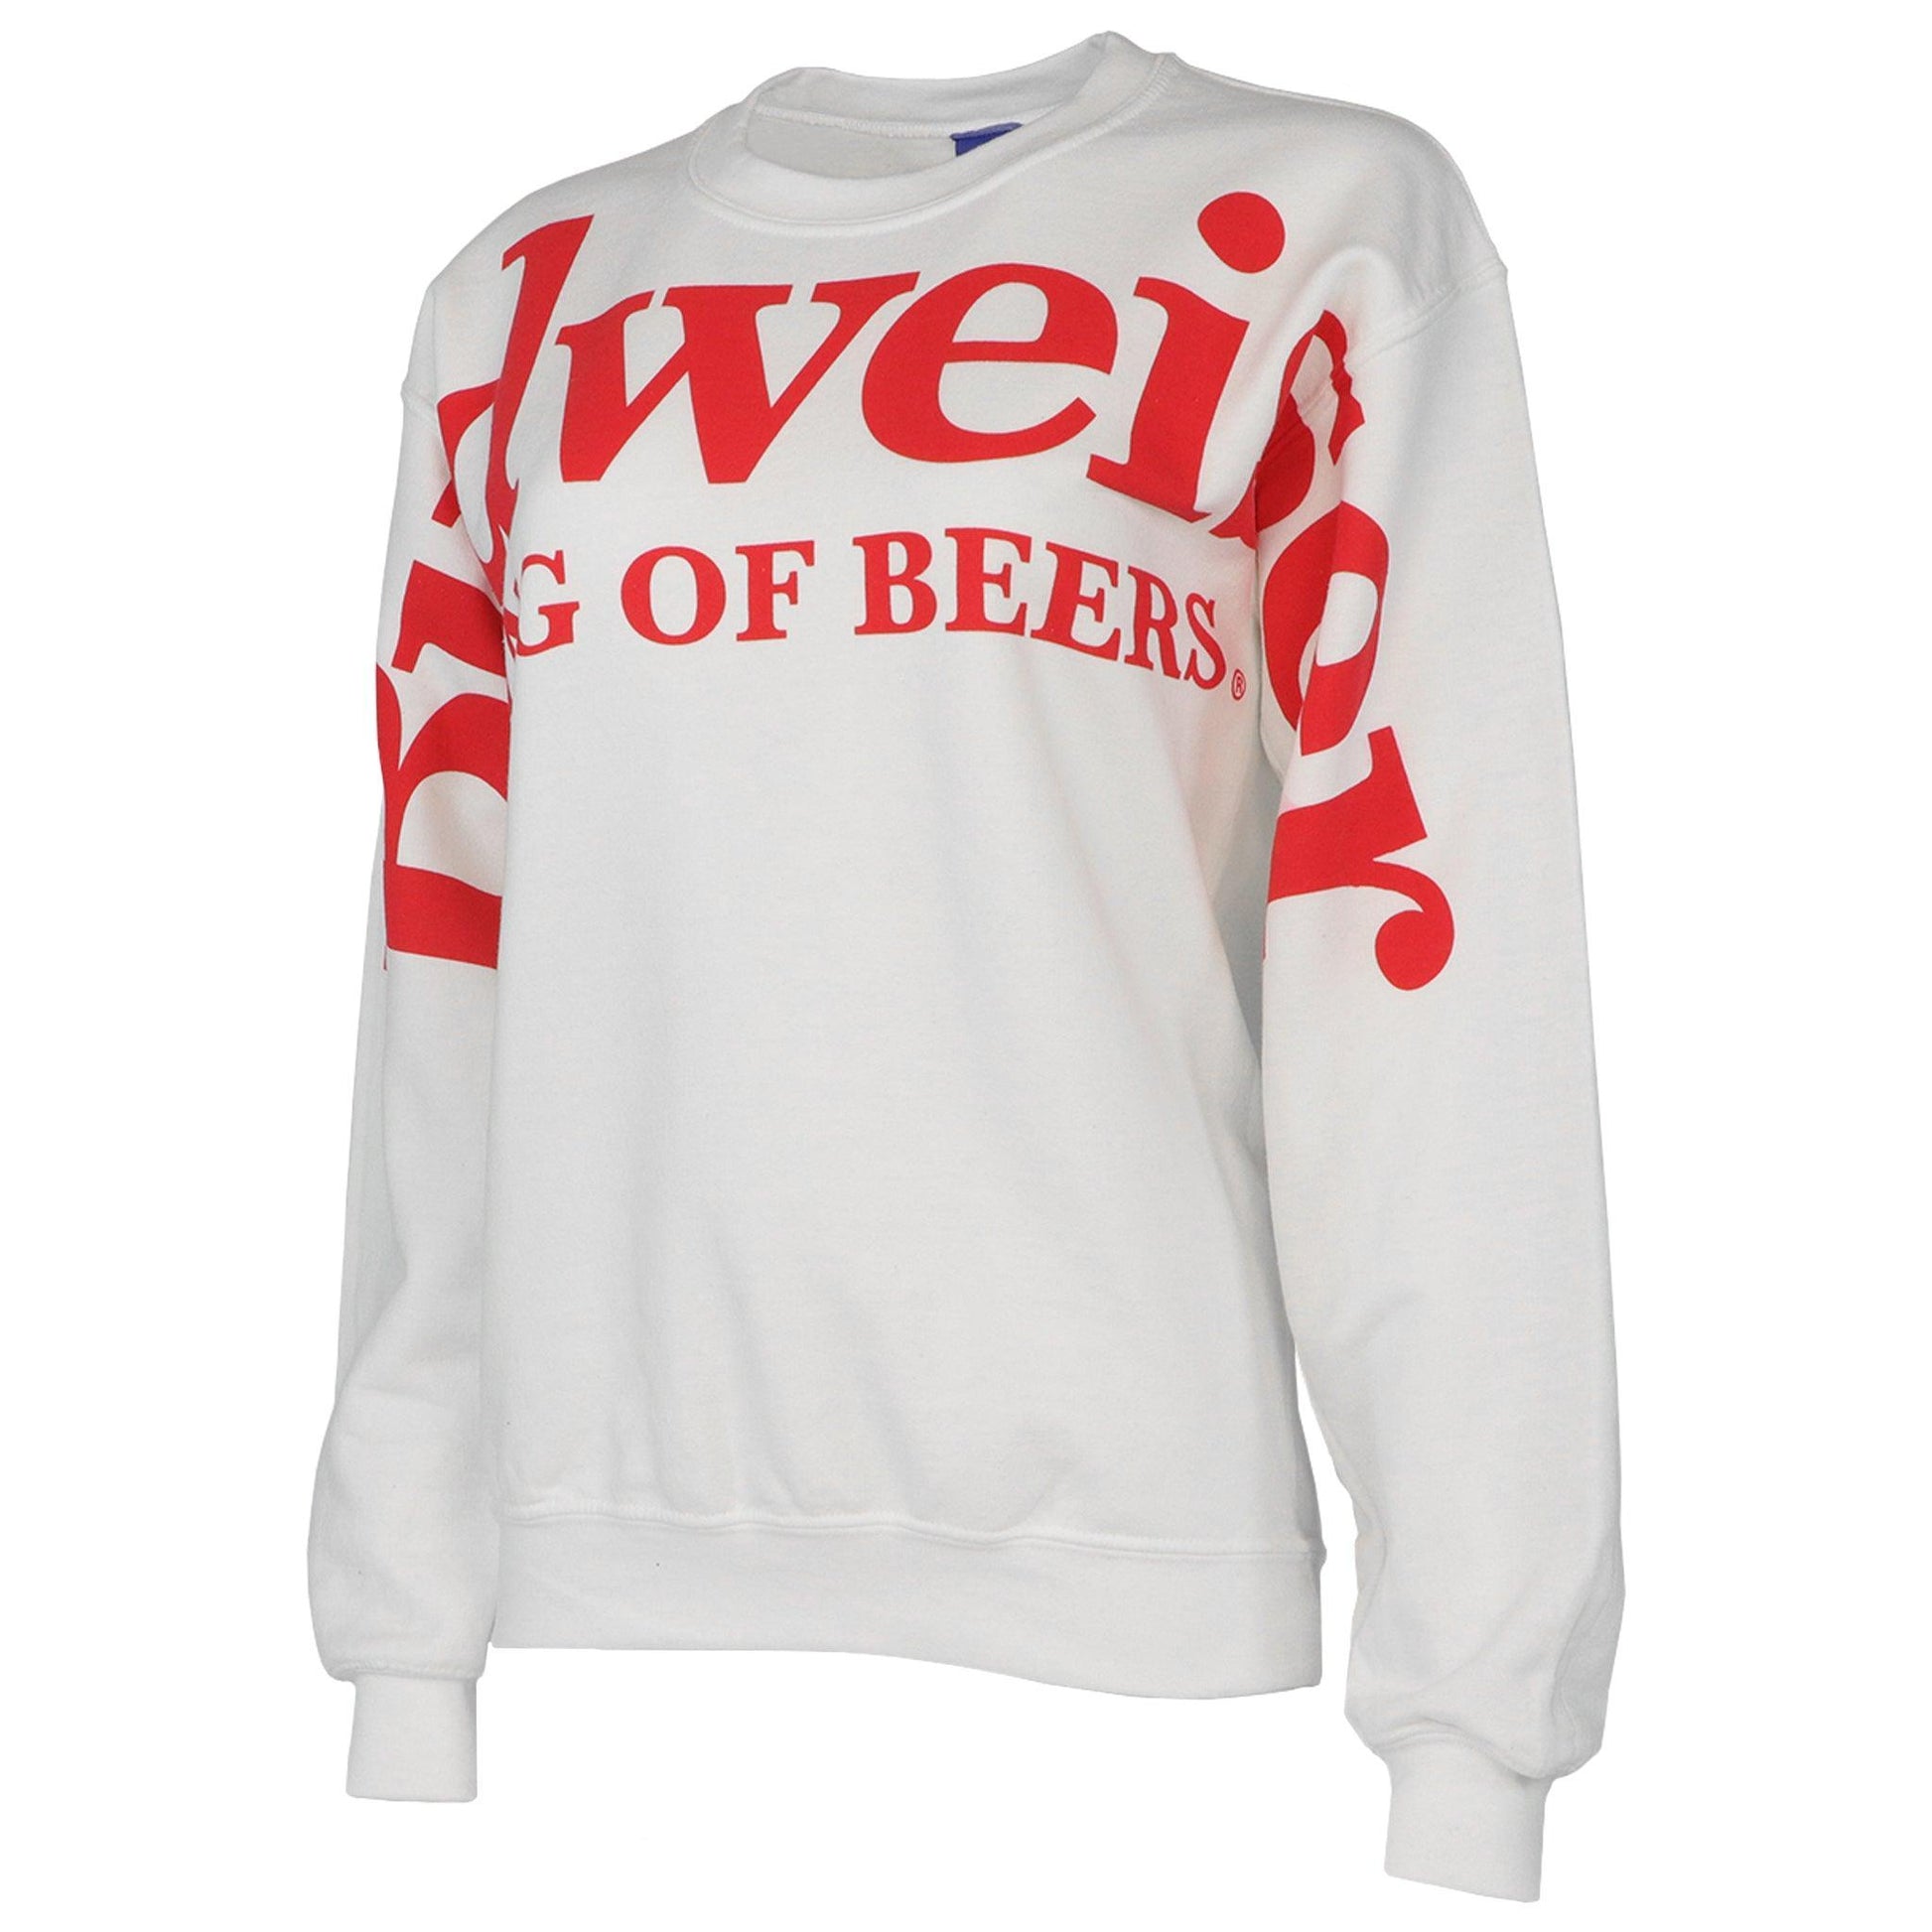 Front view of Budweiser King of Beers sweatshirt